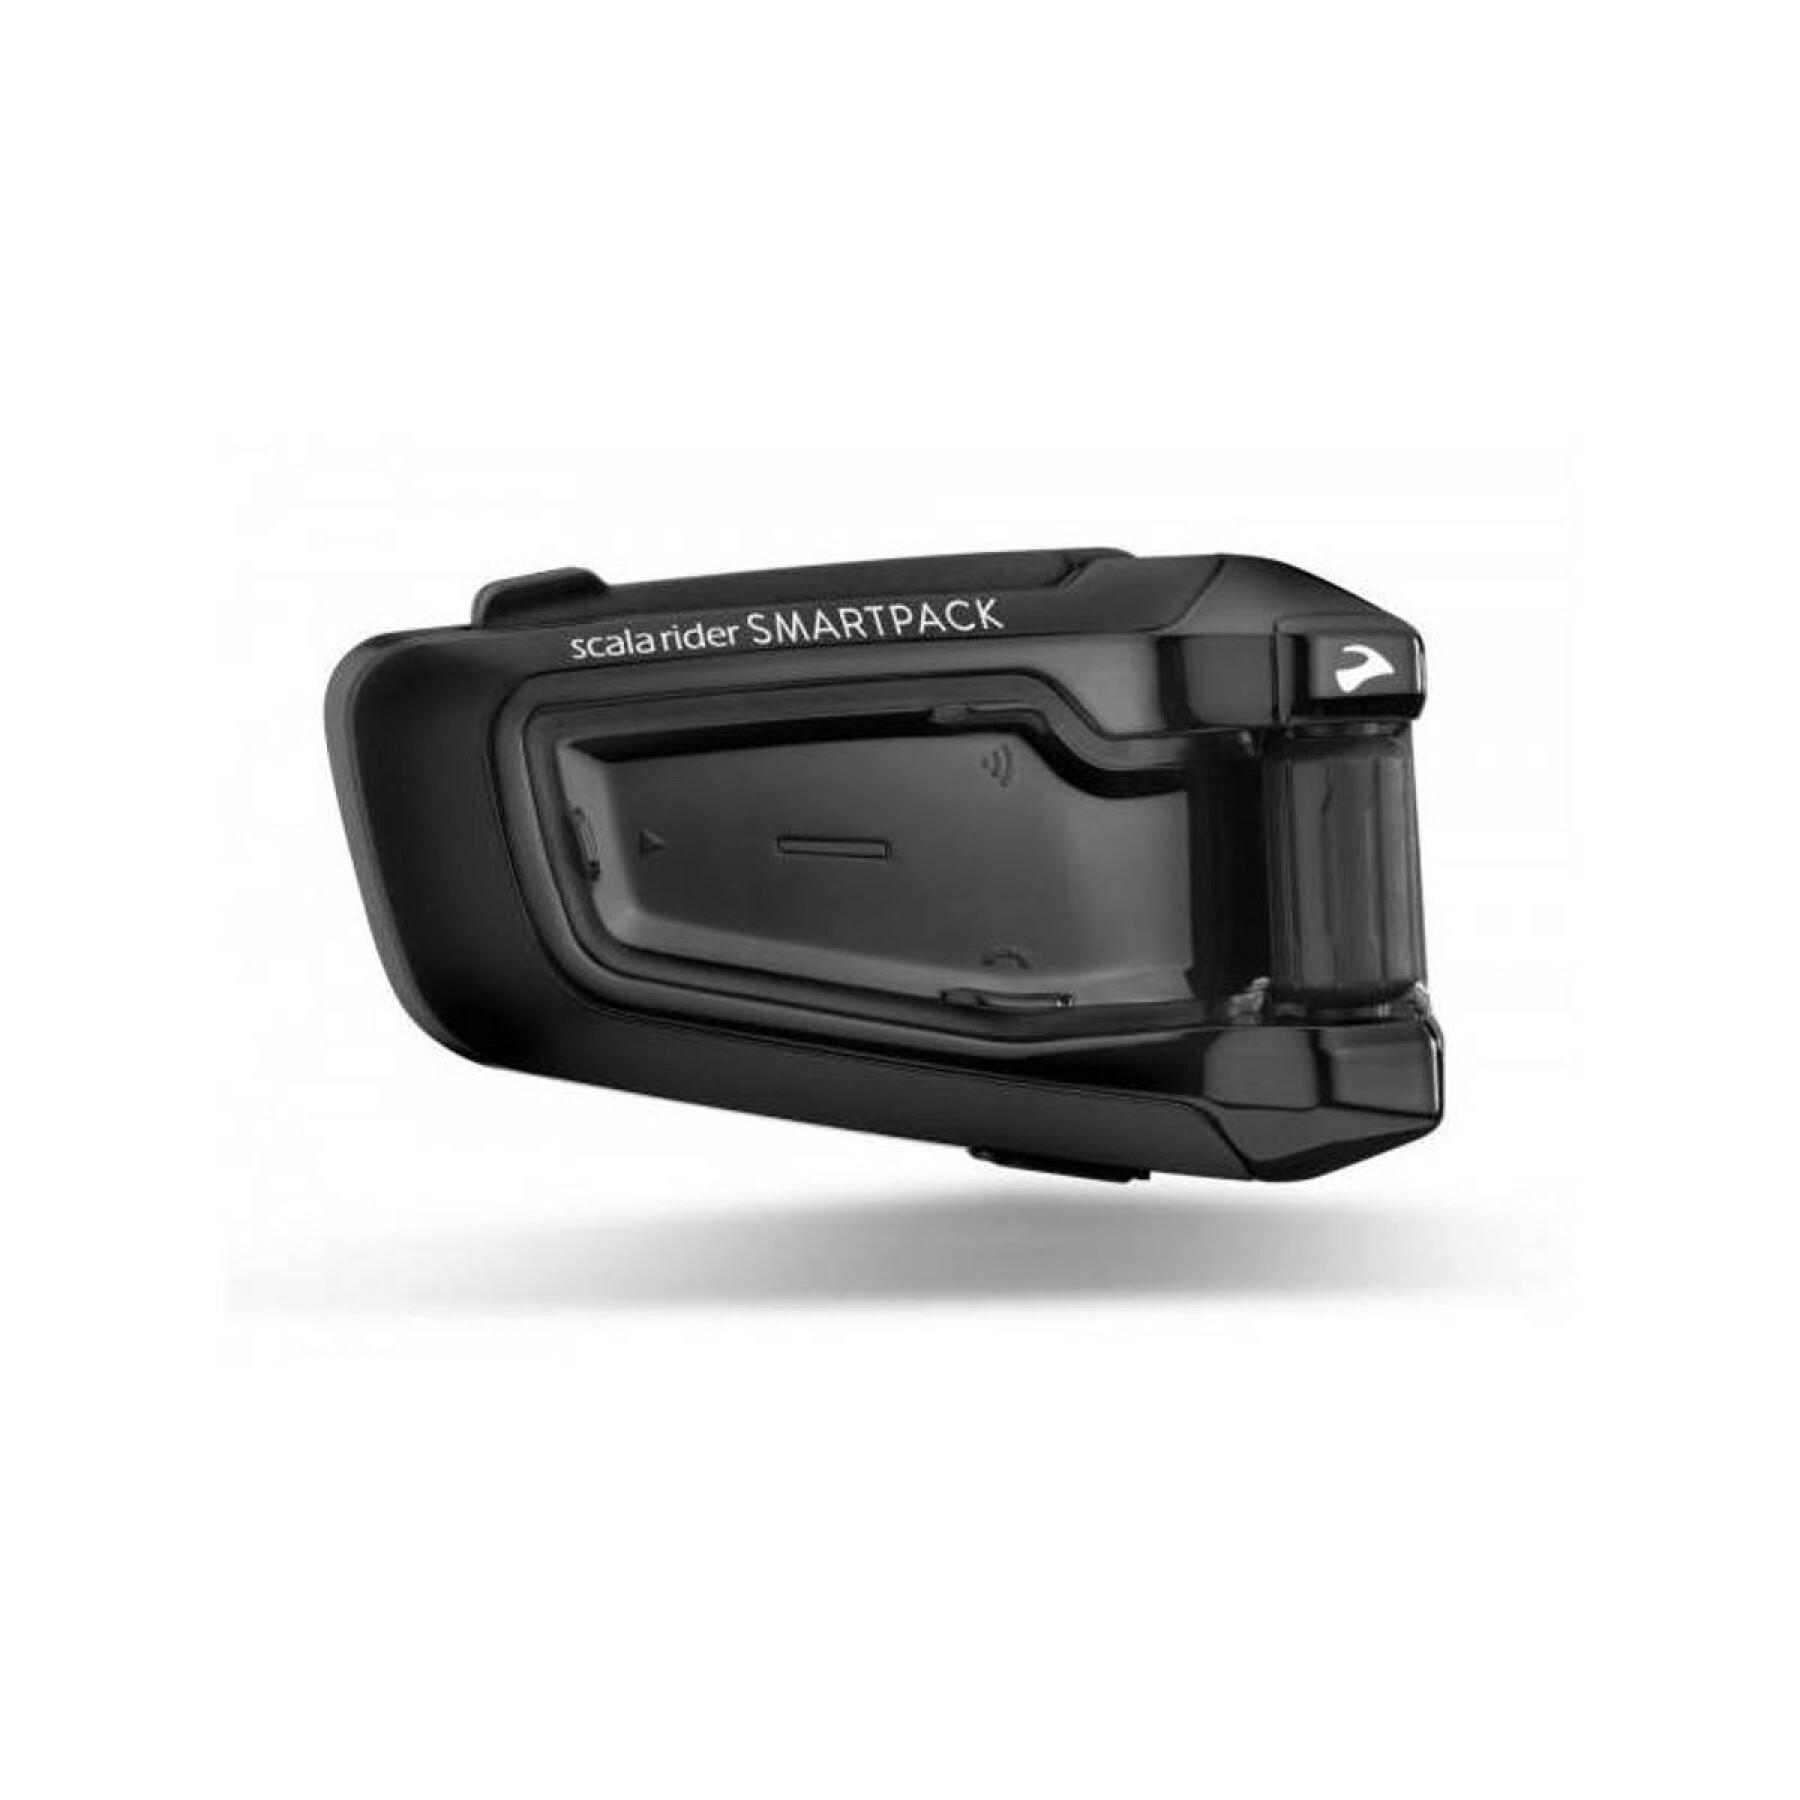 Interfono Bluetooth per moto Cardo Scala Rider Smartpack